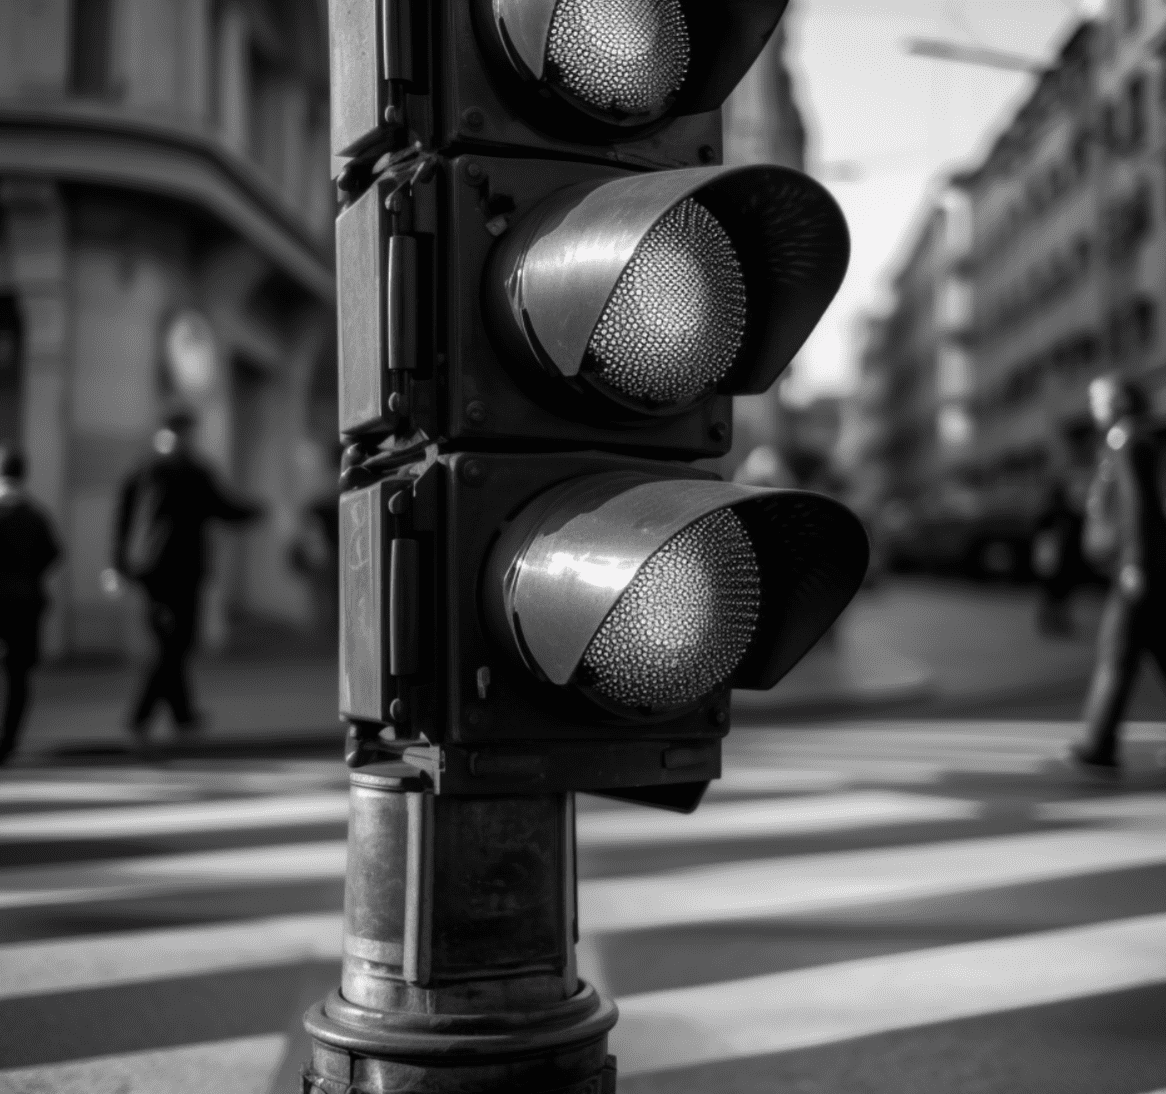 A B&W image of a traffic signal